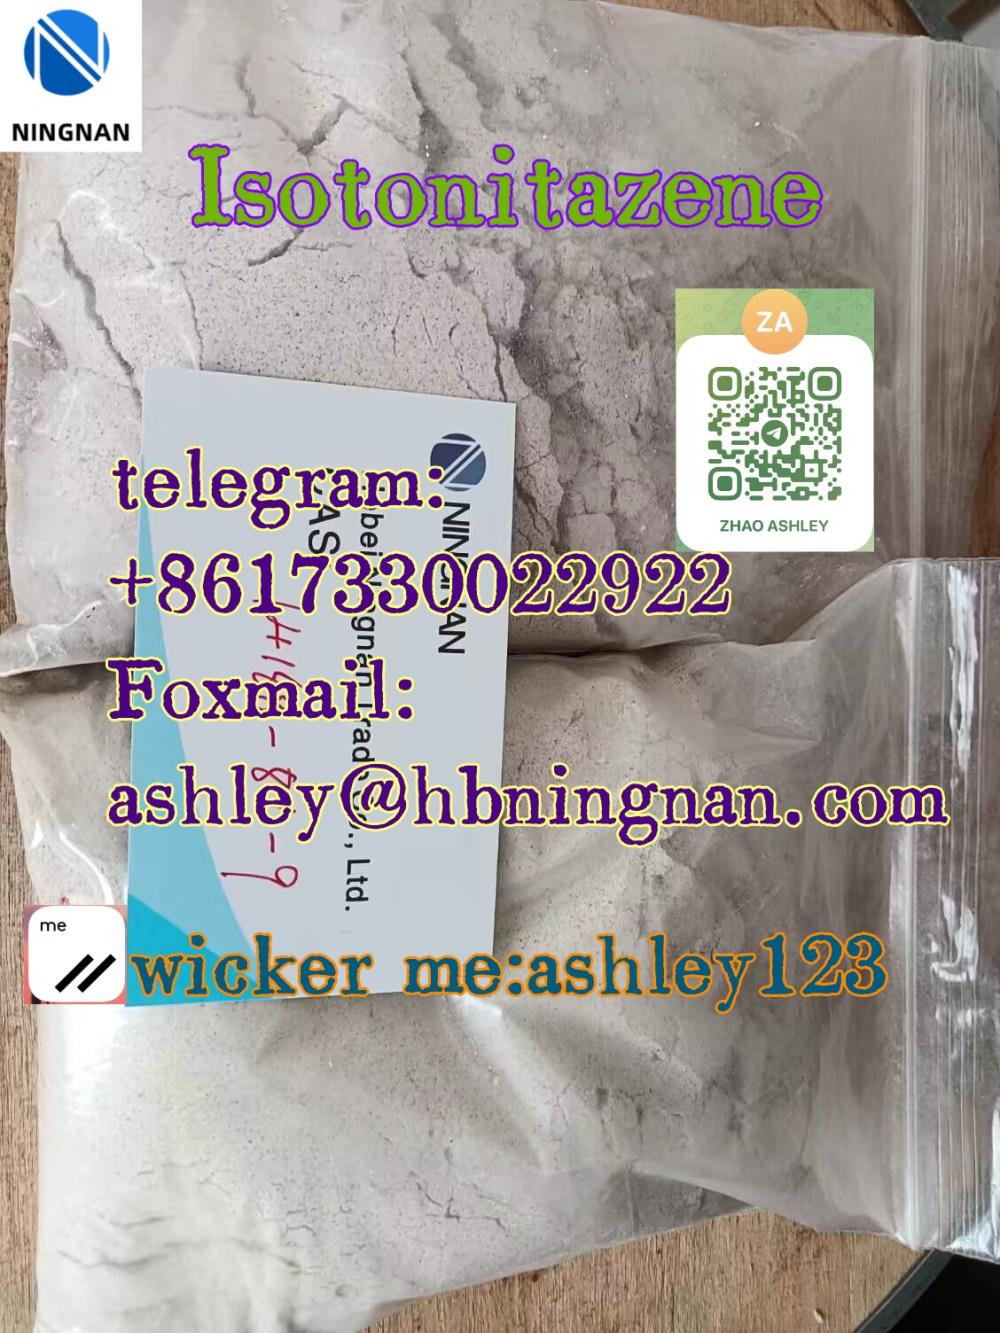 cas 14188-81-9  Isotonitazene pharmaceutical intermediates